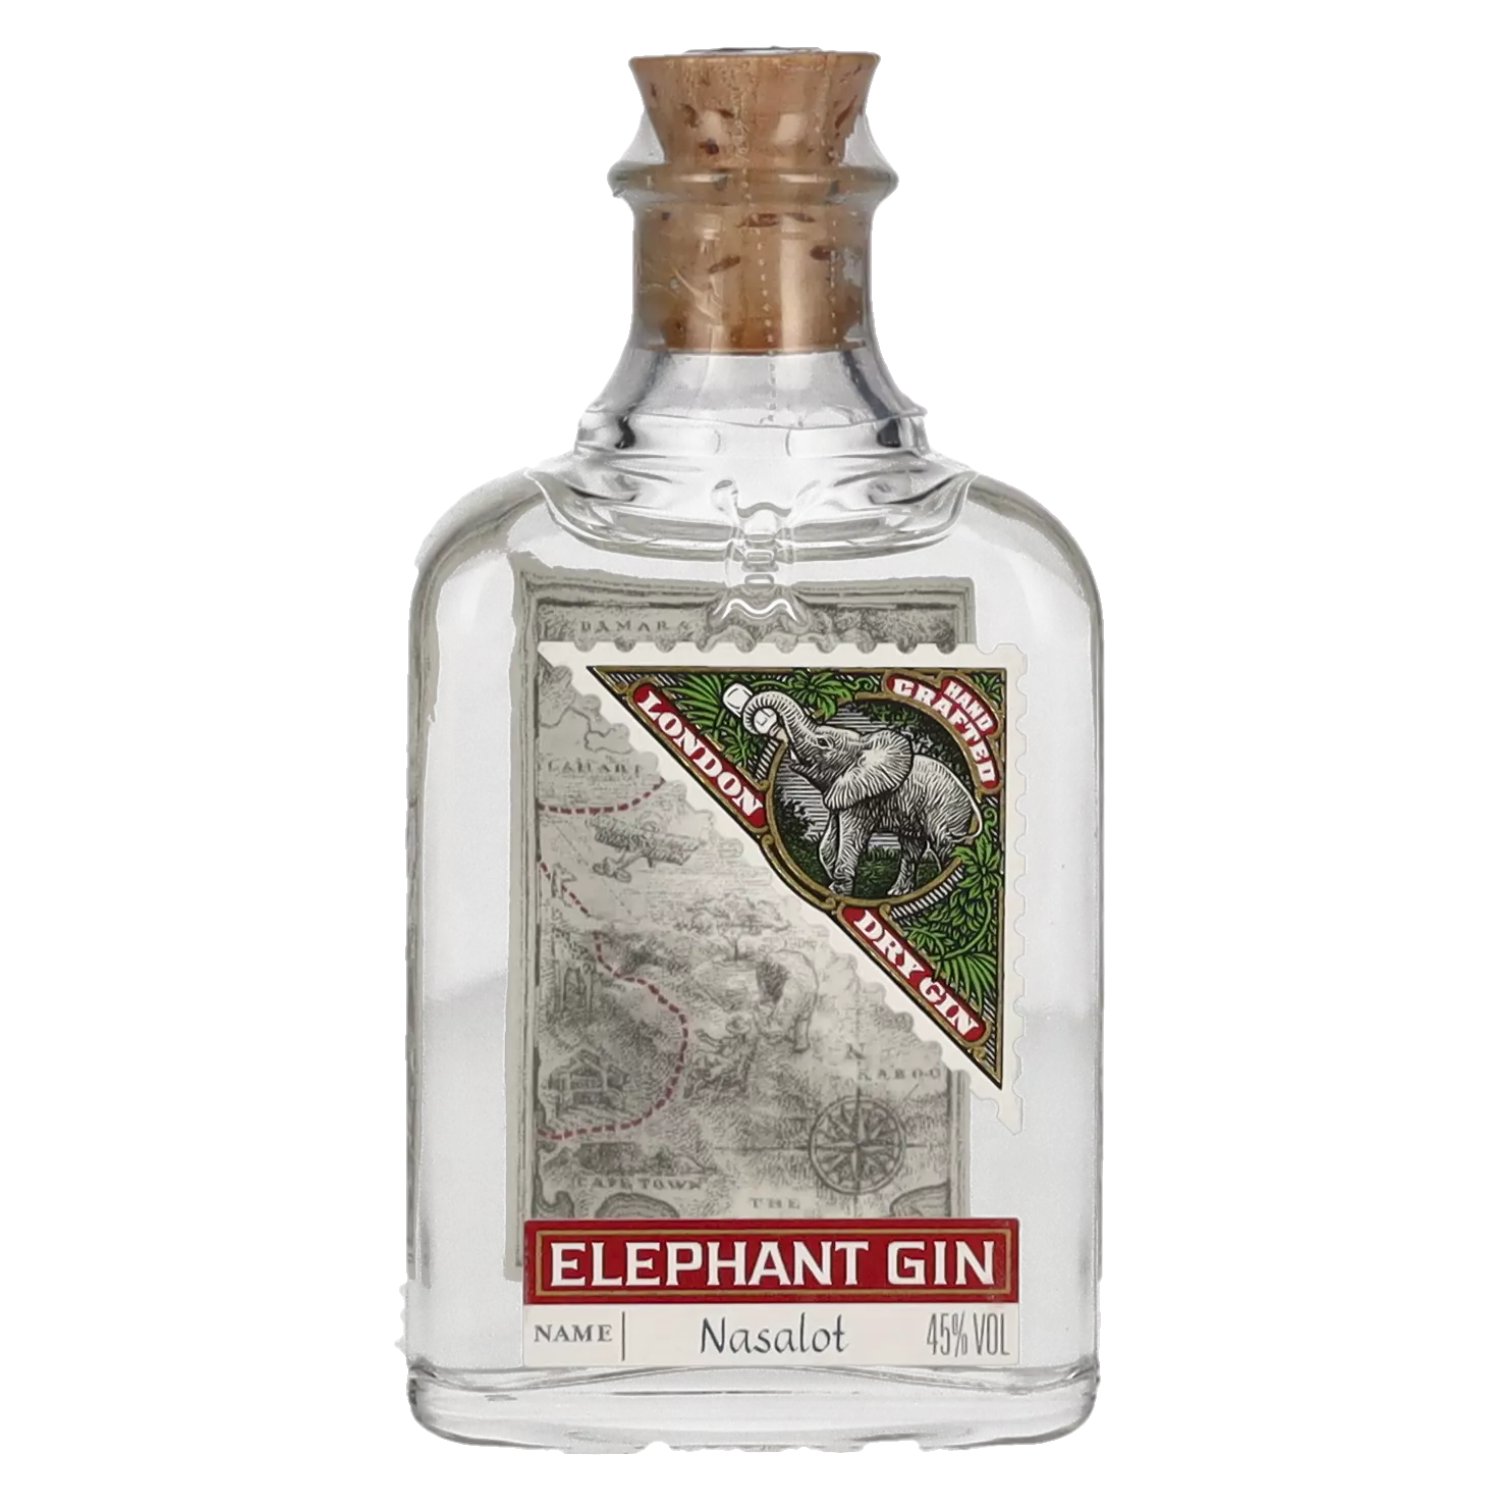 Elephant London Vol. 0,05l Dry Gin - delicando 45